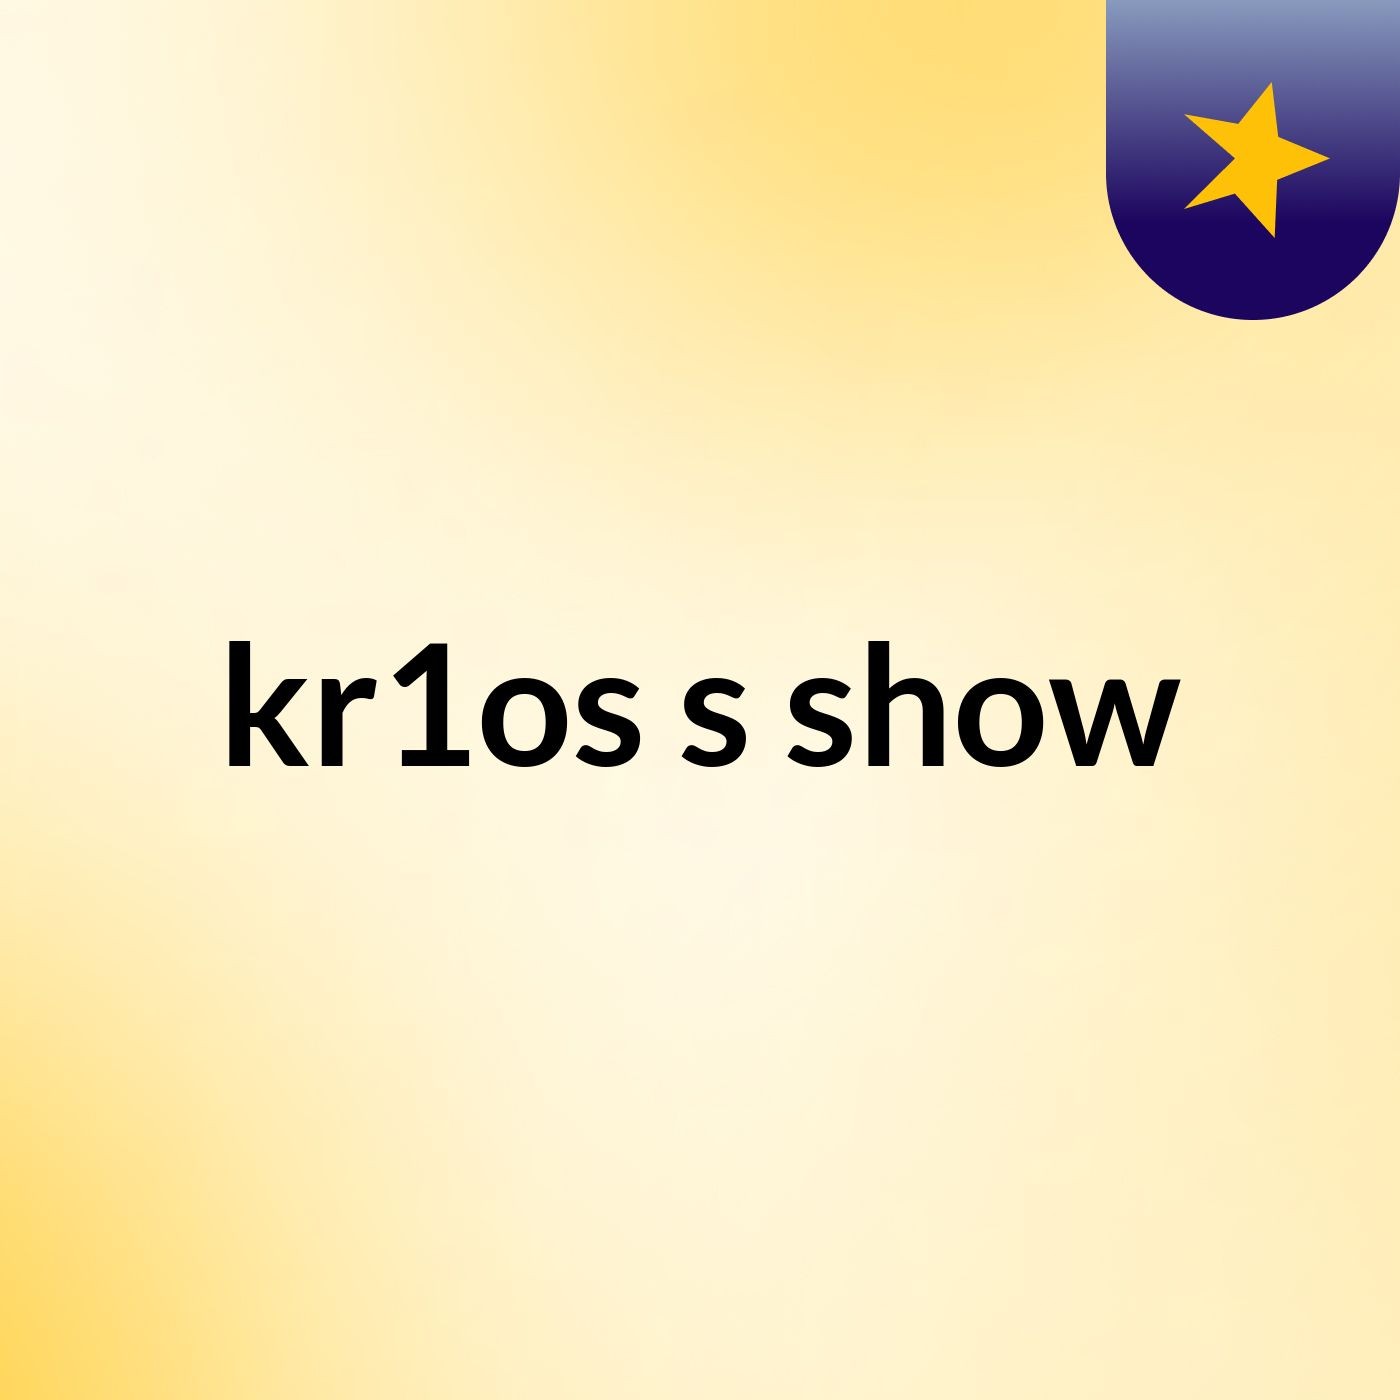 kr1os's show